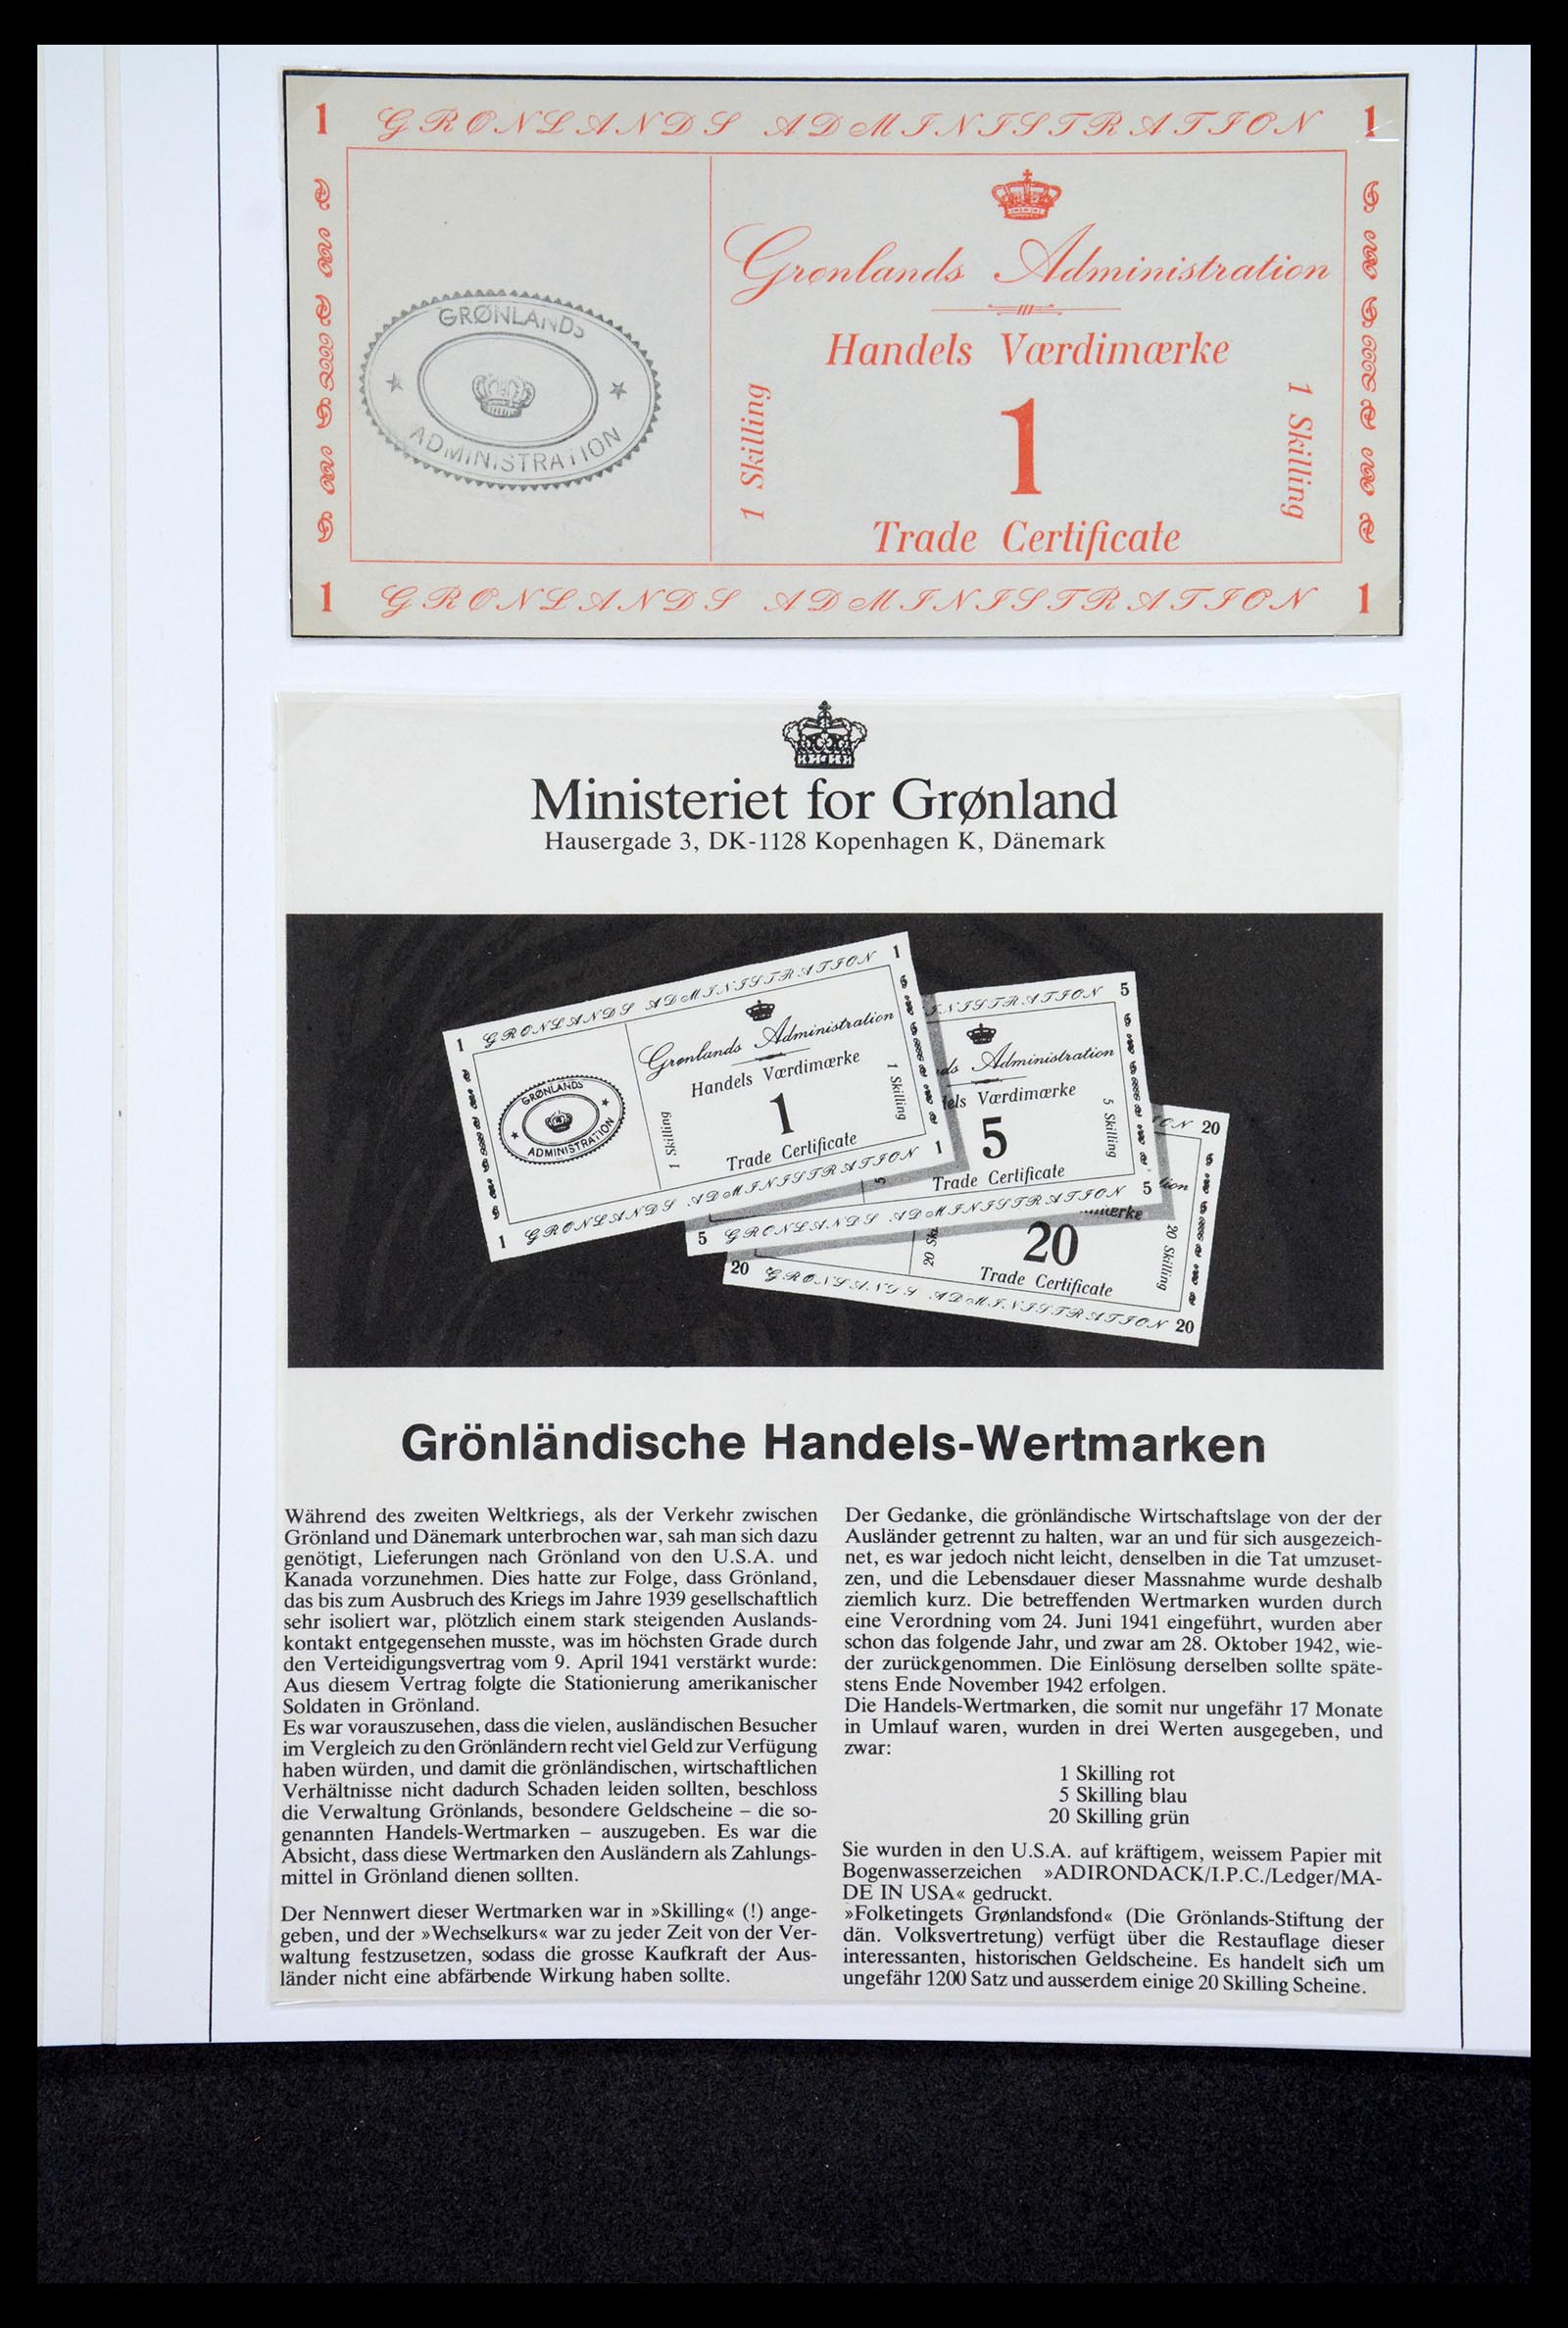 36748 029 - Stamp collection 36748 Greenland pakke-porto 1905-1930.